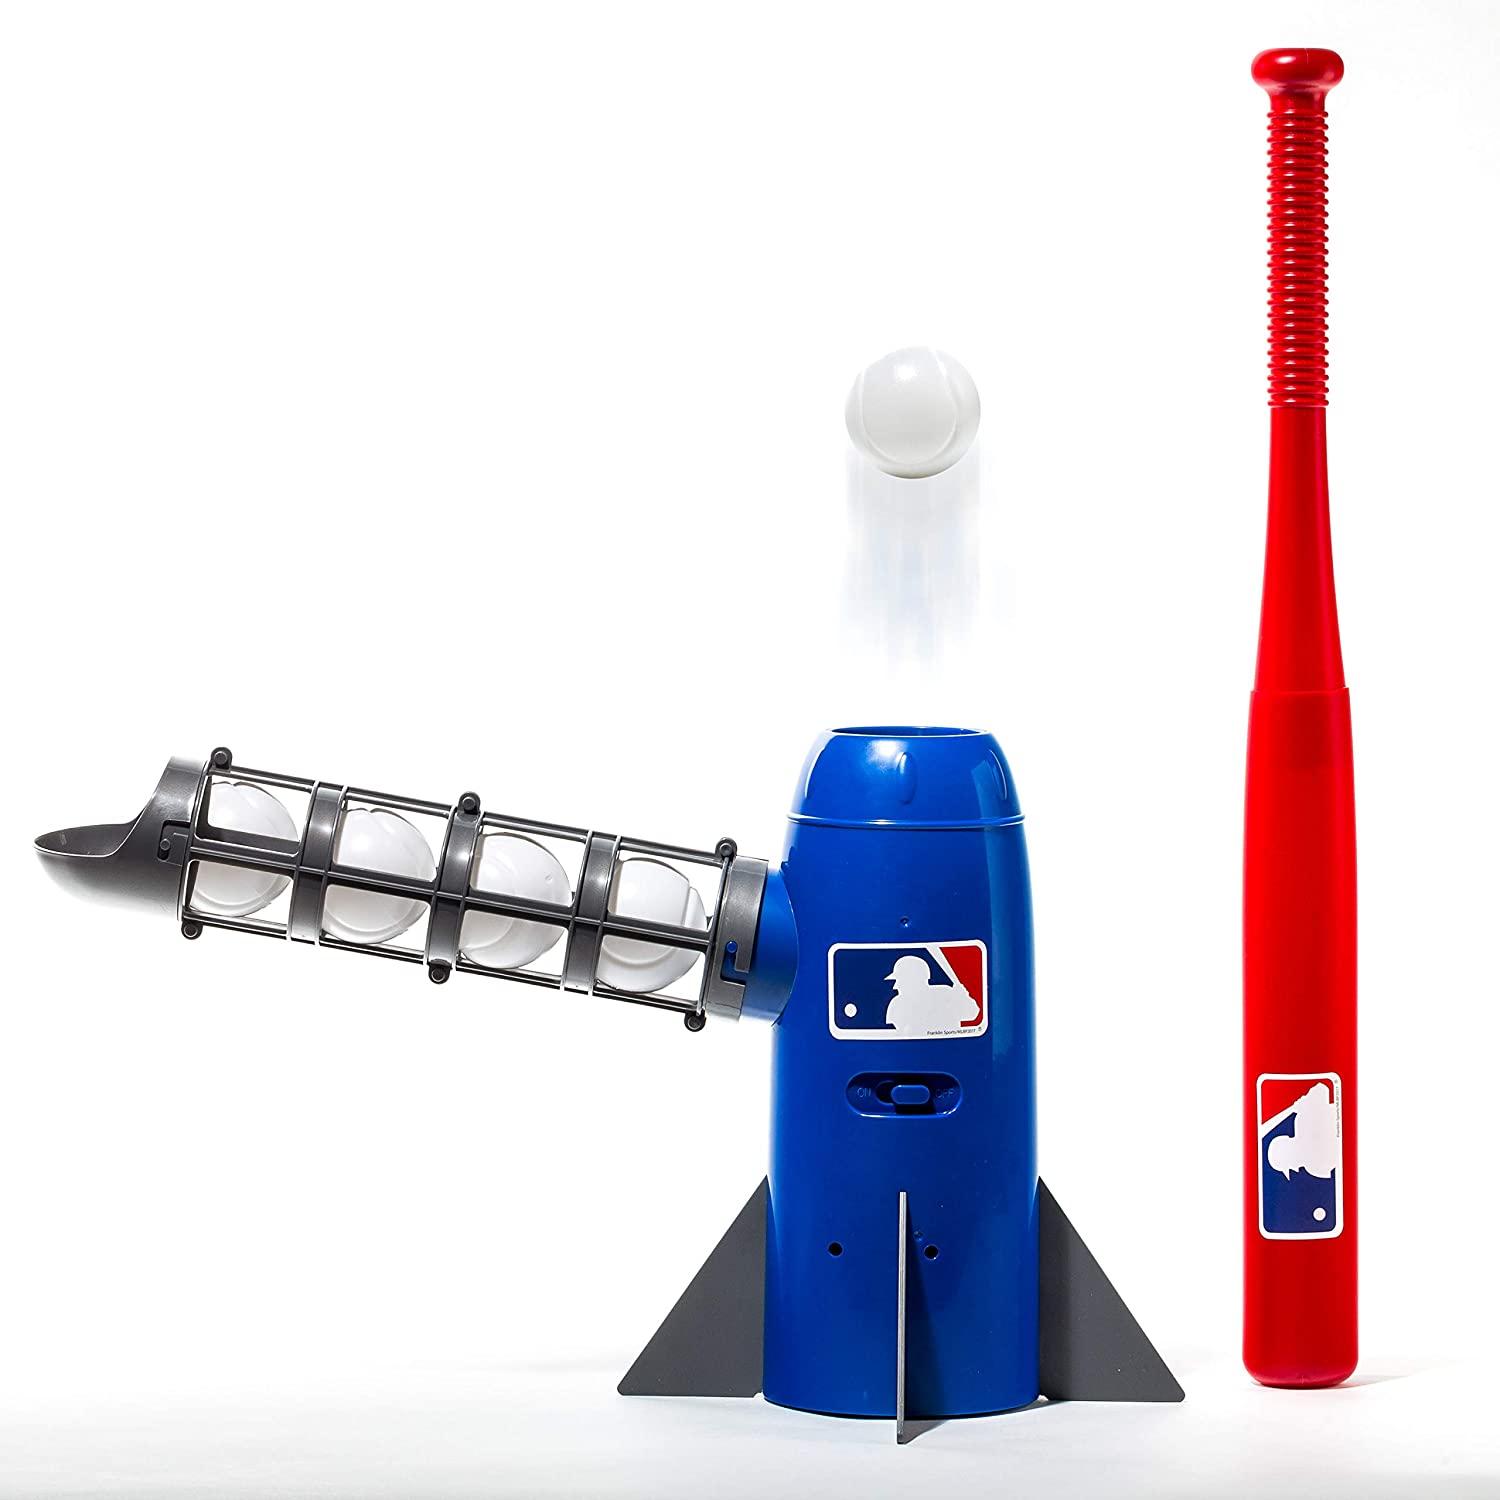 Franklin Sports Pop Rocket MLB Kids Pitching Machine for $22.99